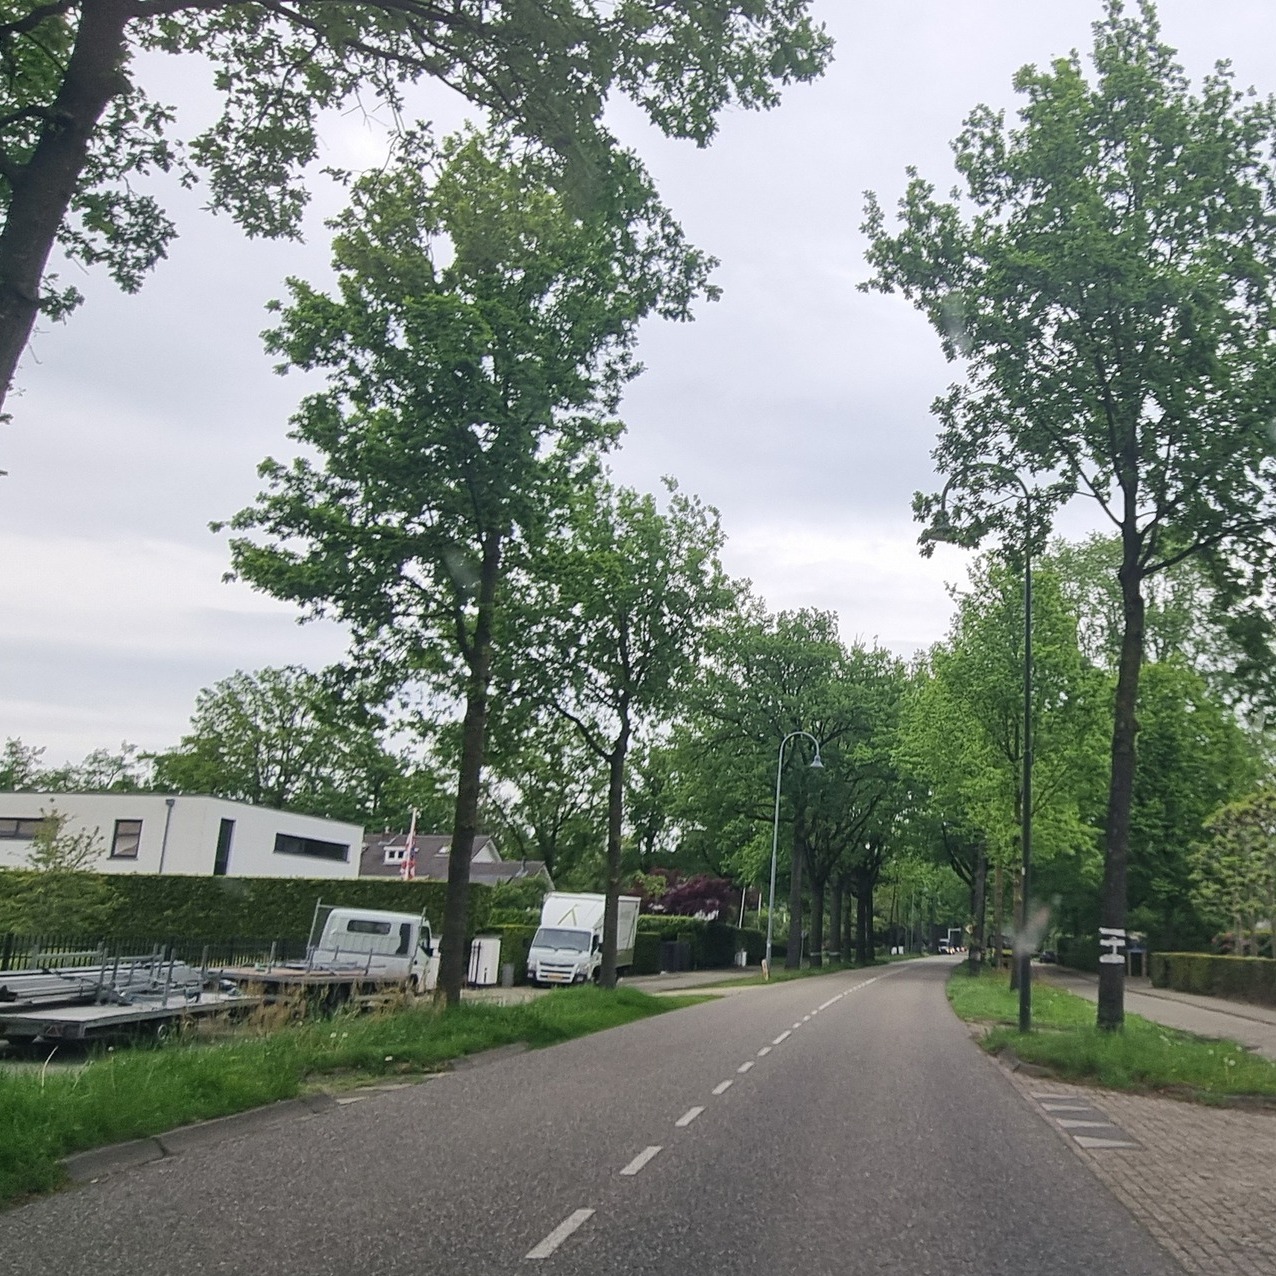 Verlaten plaats ongeval - Aarle-Rixtelseweg - Helmond